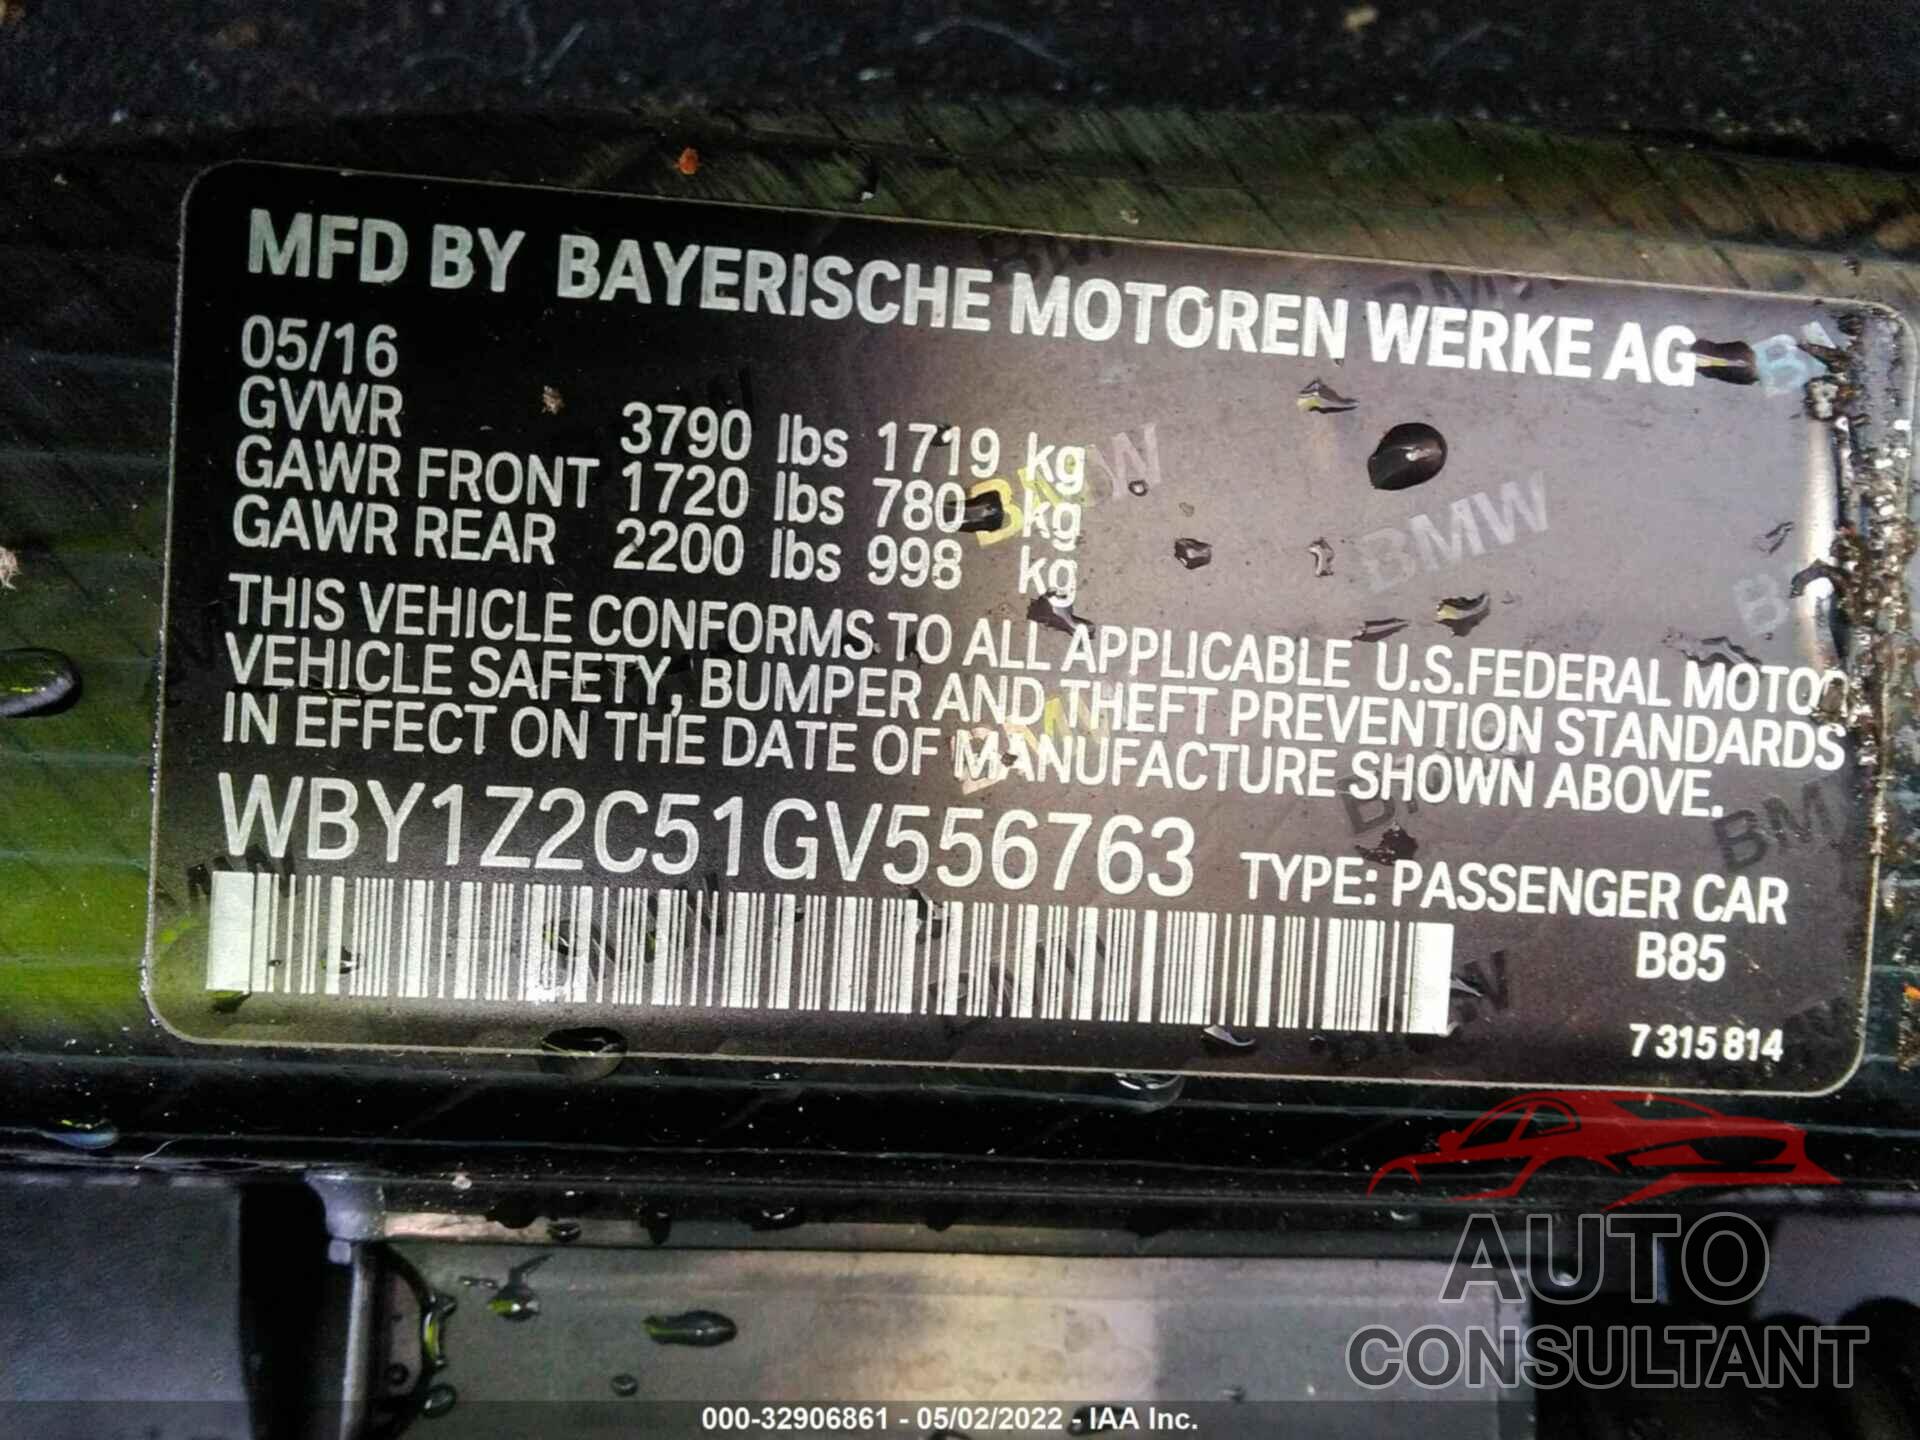 BMW I3 2016 - WBY1Z2C51GV556763